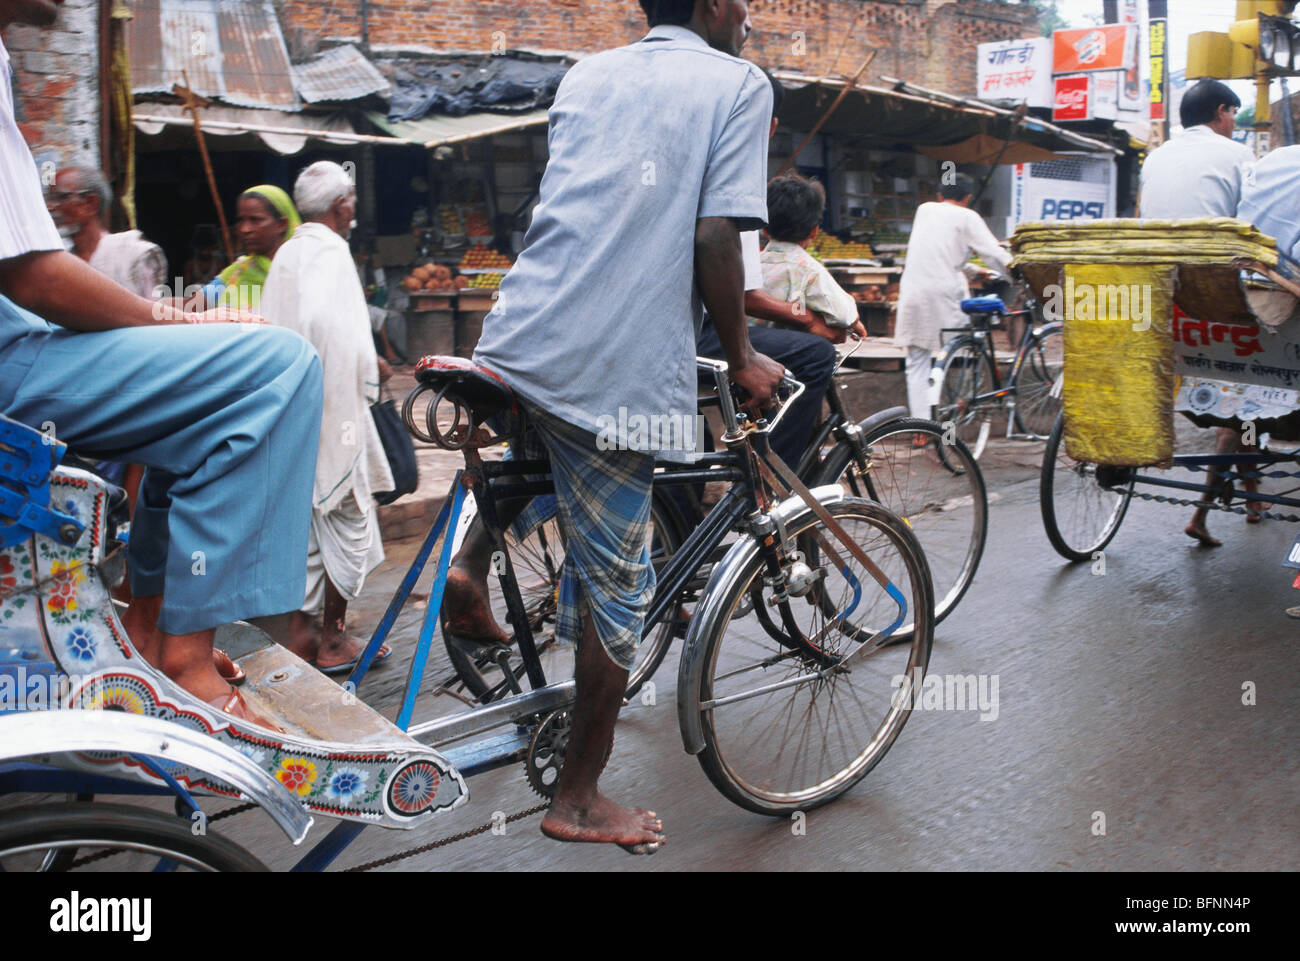 Fahrrad Rikscha; Gorakhpur; Uttar Pradesh; Indien; asien; Fahrrad Taxi, velotaxi, Pedicab, bikecab, Cyclo, Beca, Becak, trisikad, Dreirad Taxi, trishaw, Stockfoto